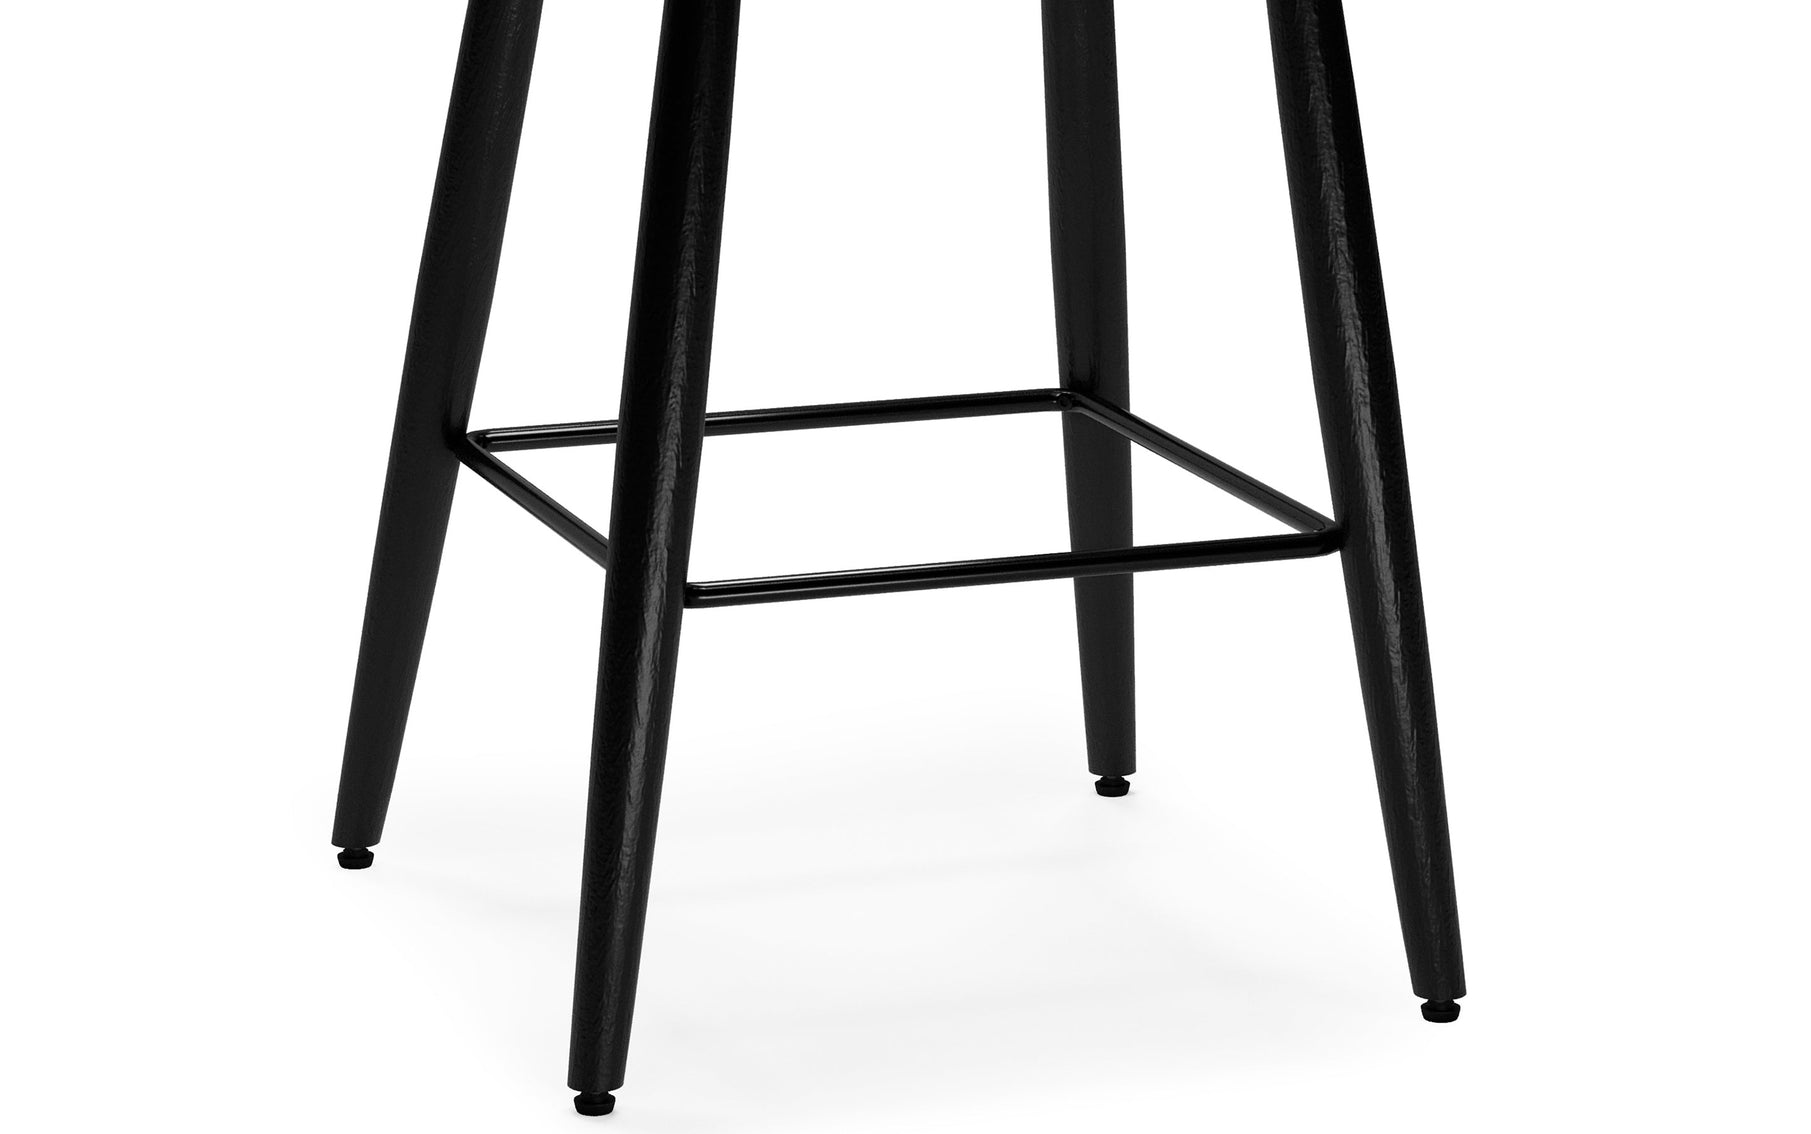 Black Vegan Leather | Callie Counter Height stool (Set of 2)